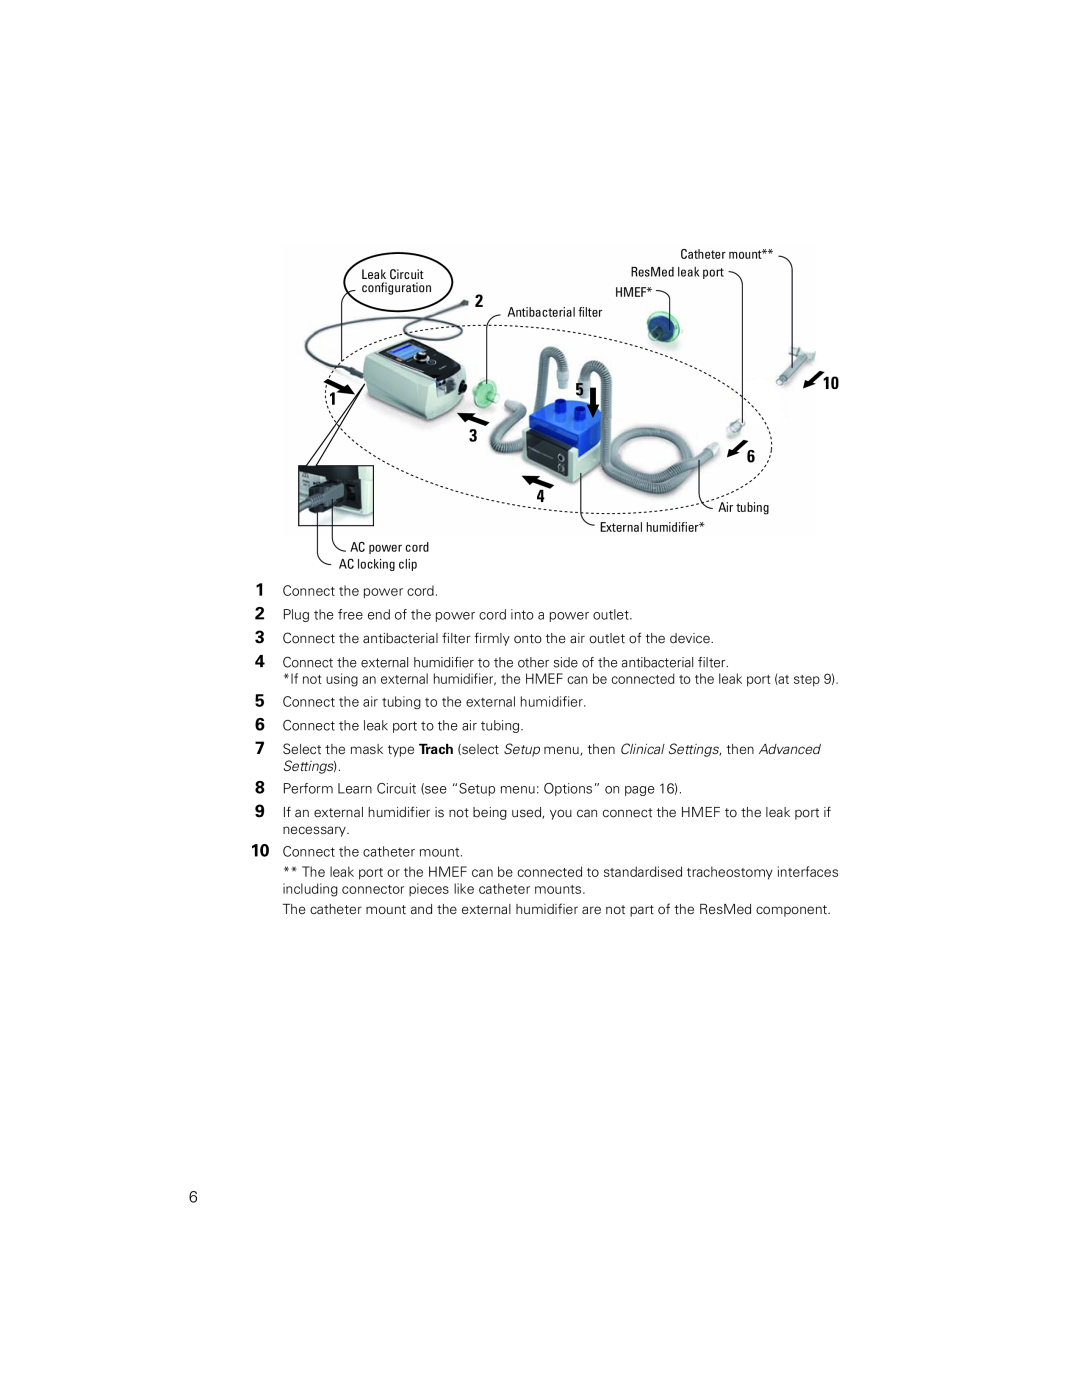 ResMed 2011-09 Leak Circuit, ResMed leak port, configuration, Hmef, Antibacterial filter, External humidifier, Air tubing 